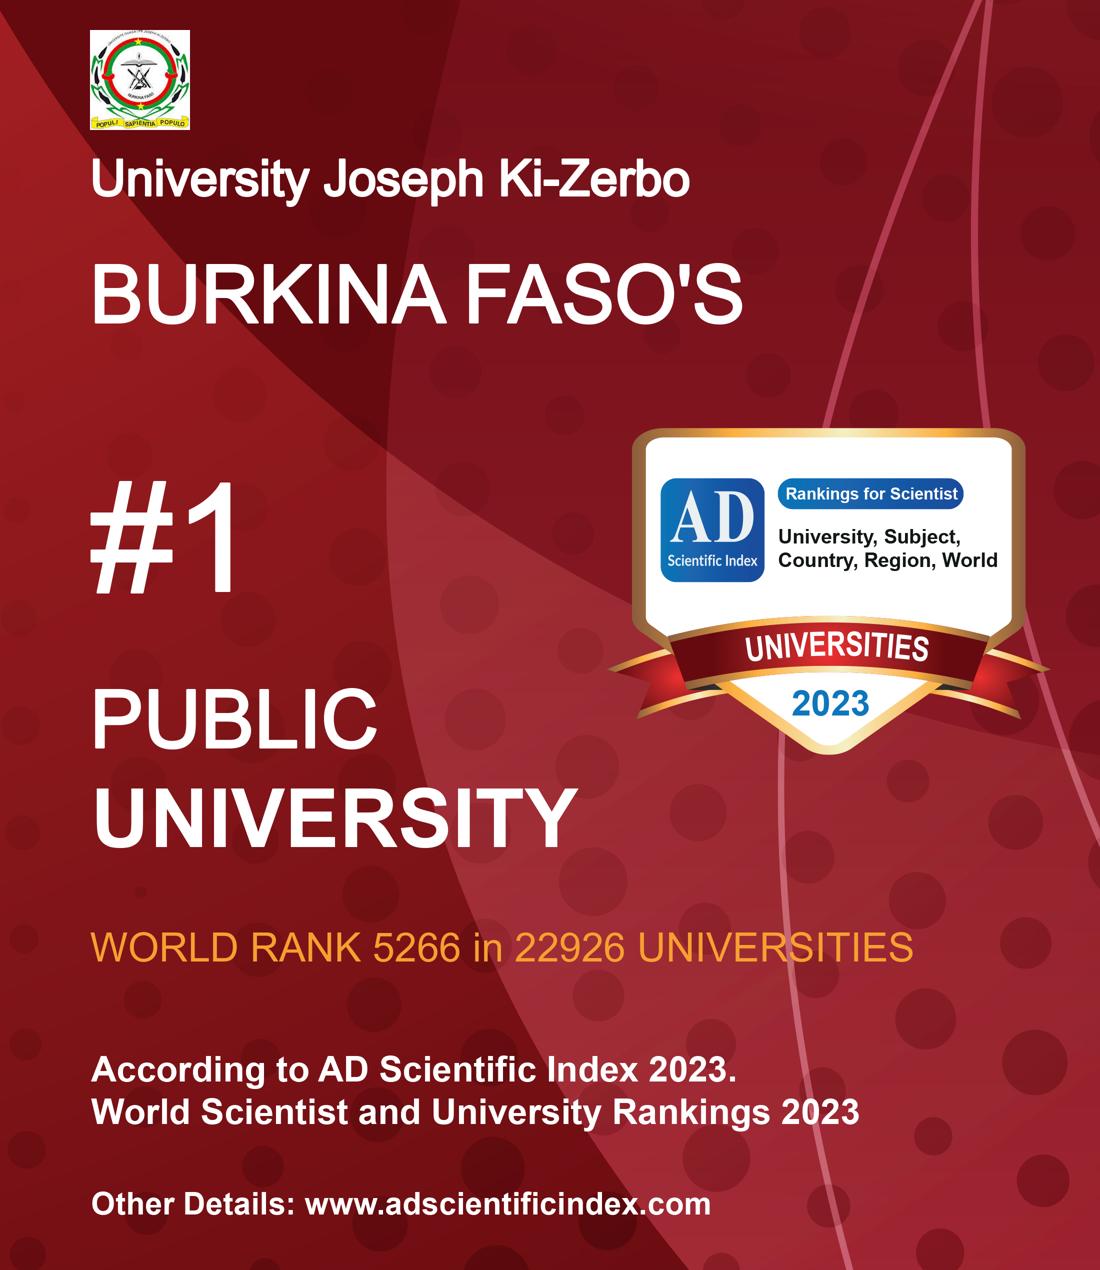 University Joseph Ki-Zerbo